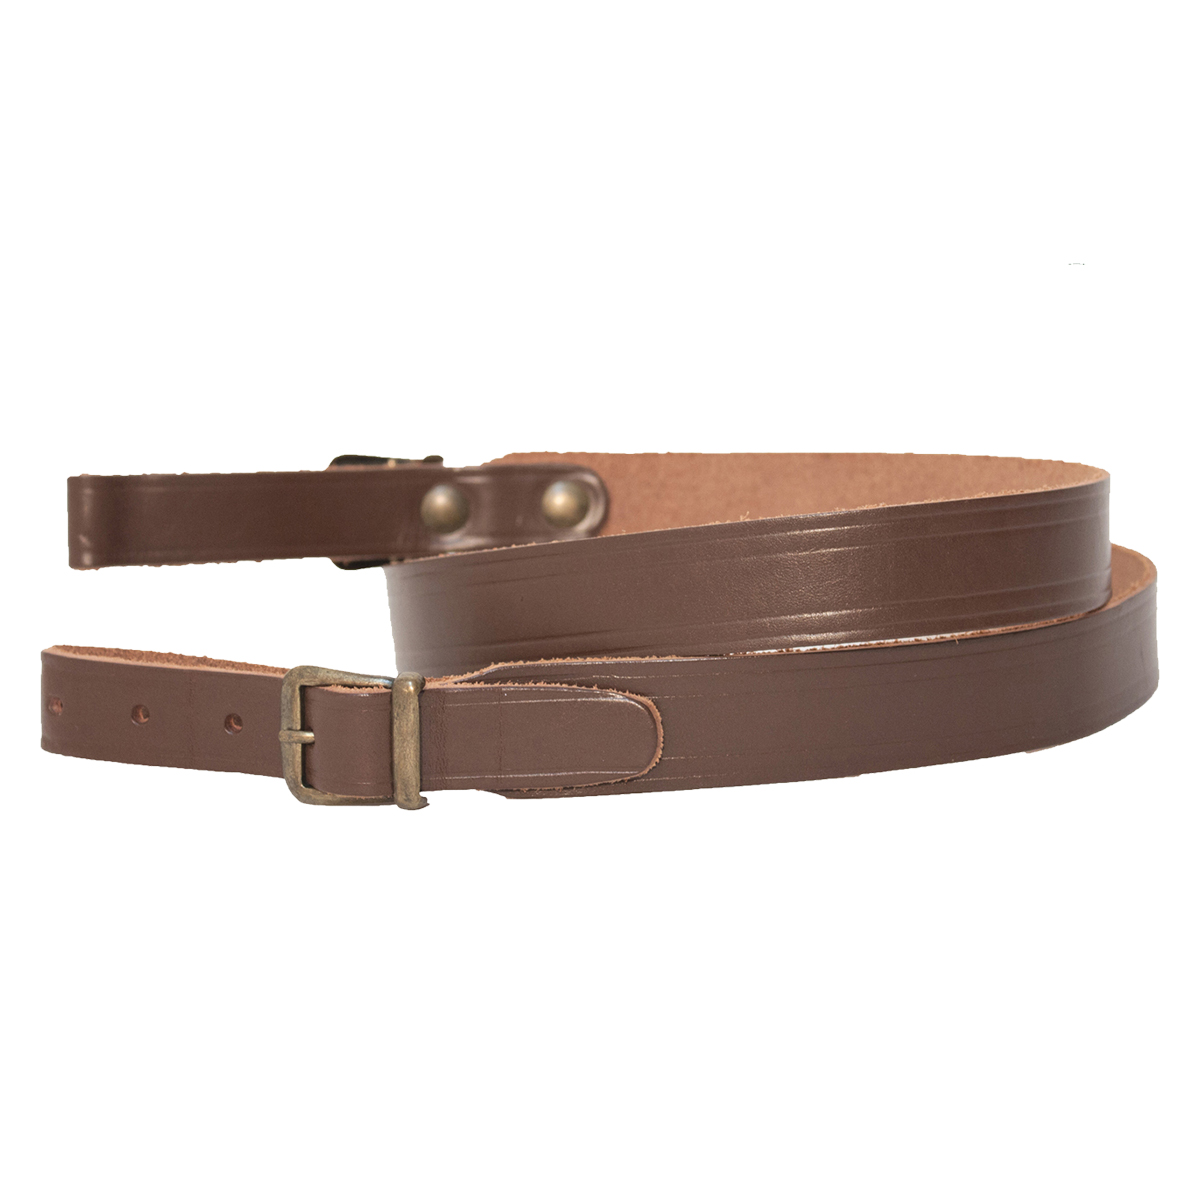 Bisley Basic Sling - Brown Leather